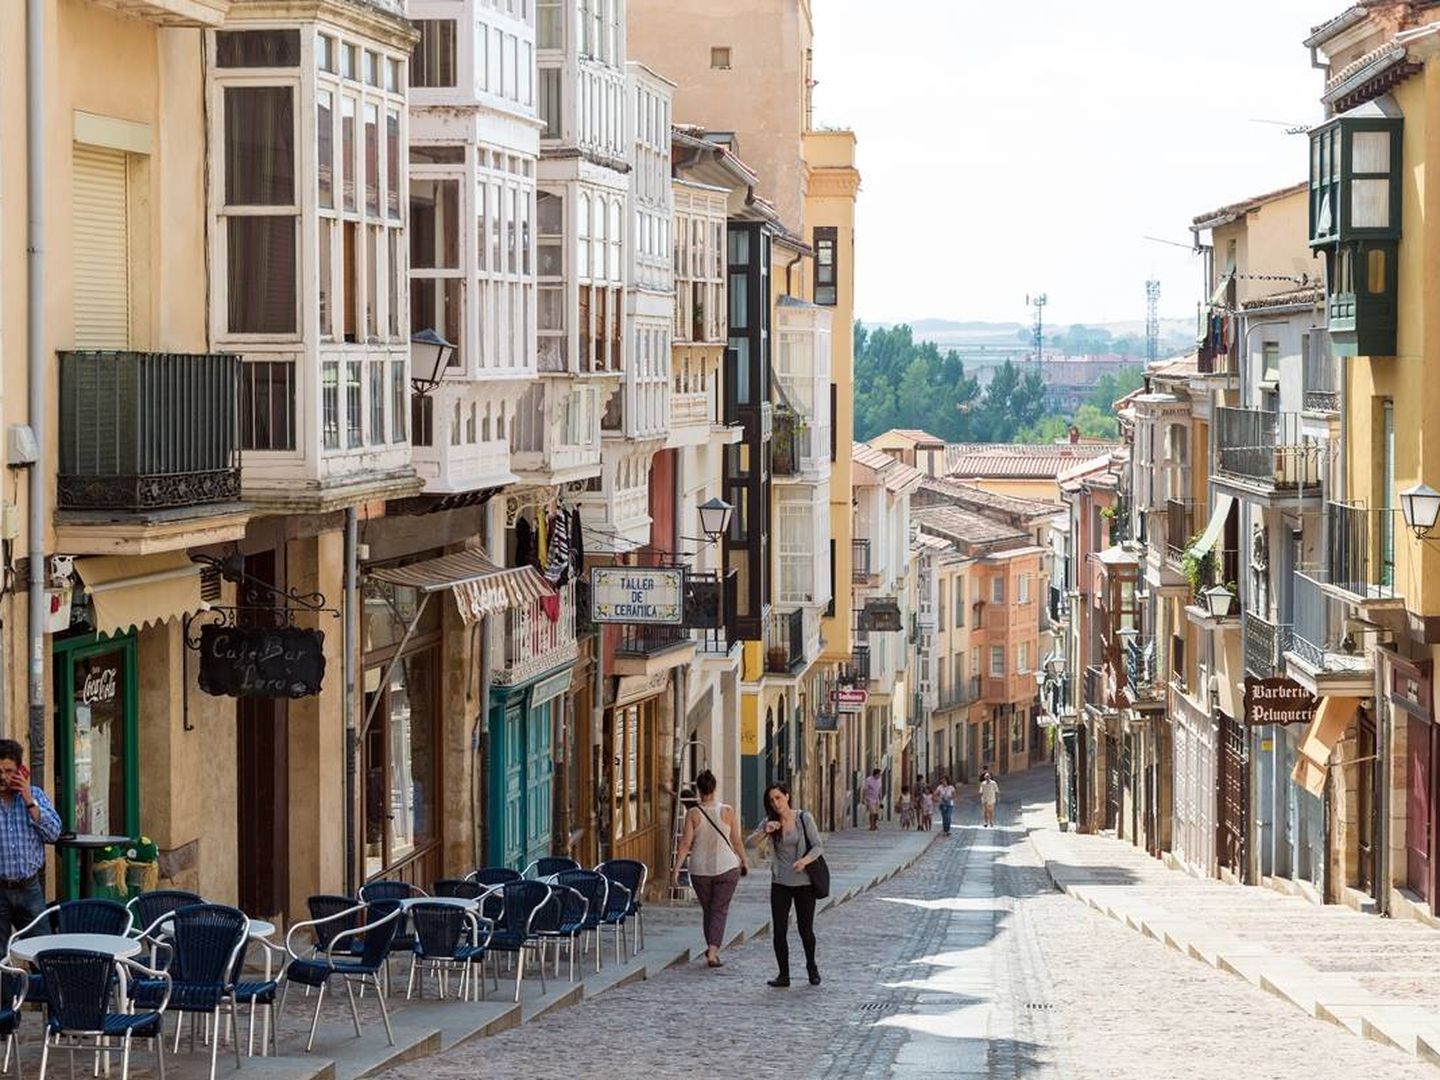 Casco histórico de Zamora. (Shutterstock)